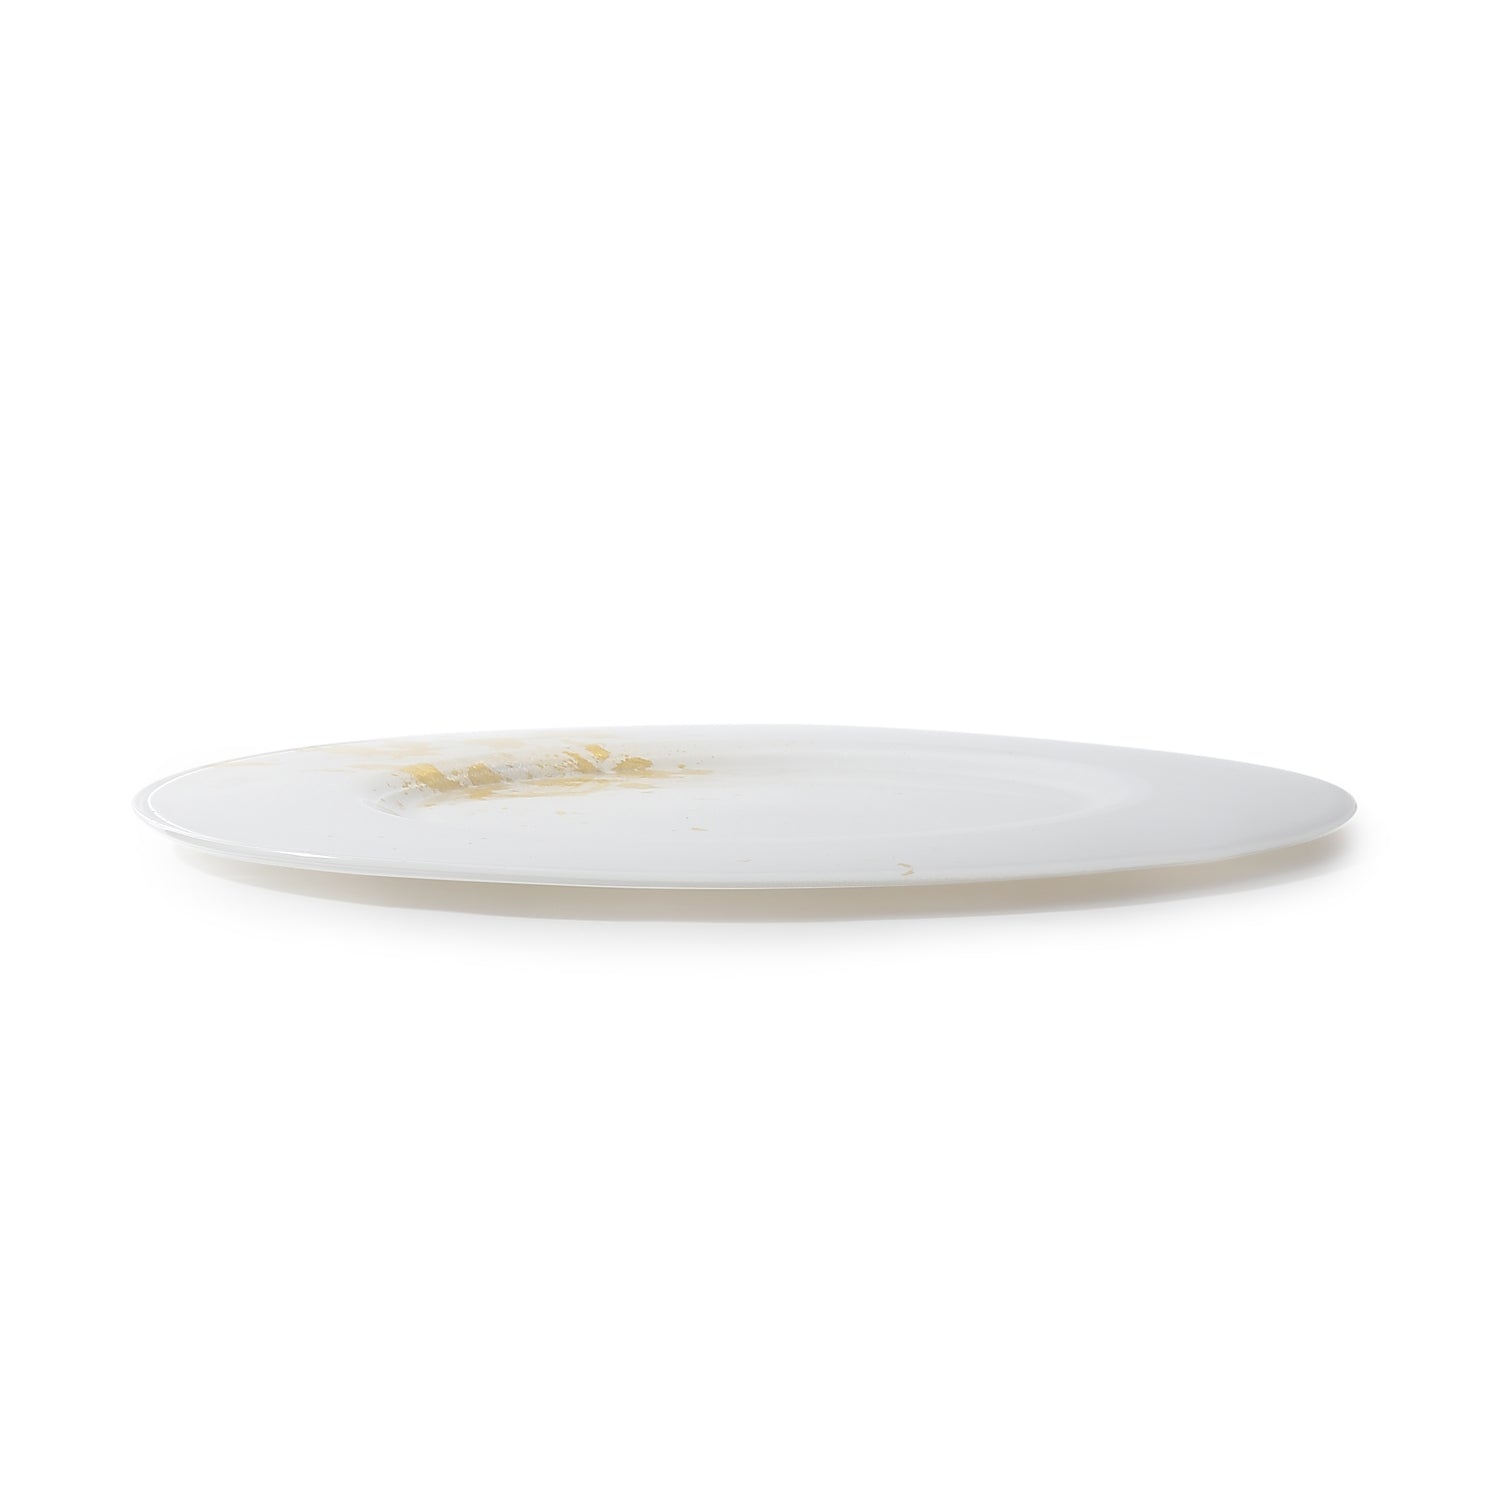 Syosaku Japanese Urushi Glass Charger Plate 13.9-inch (35cm) Pure White with Gold Leaf, Dishwasher Safe - Syosaku-Japan